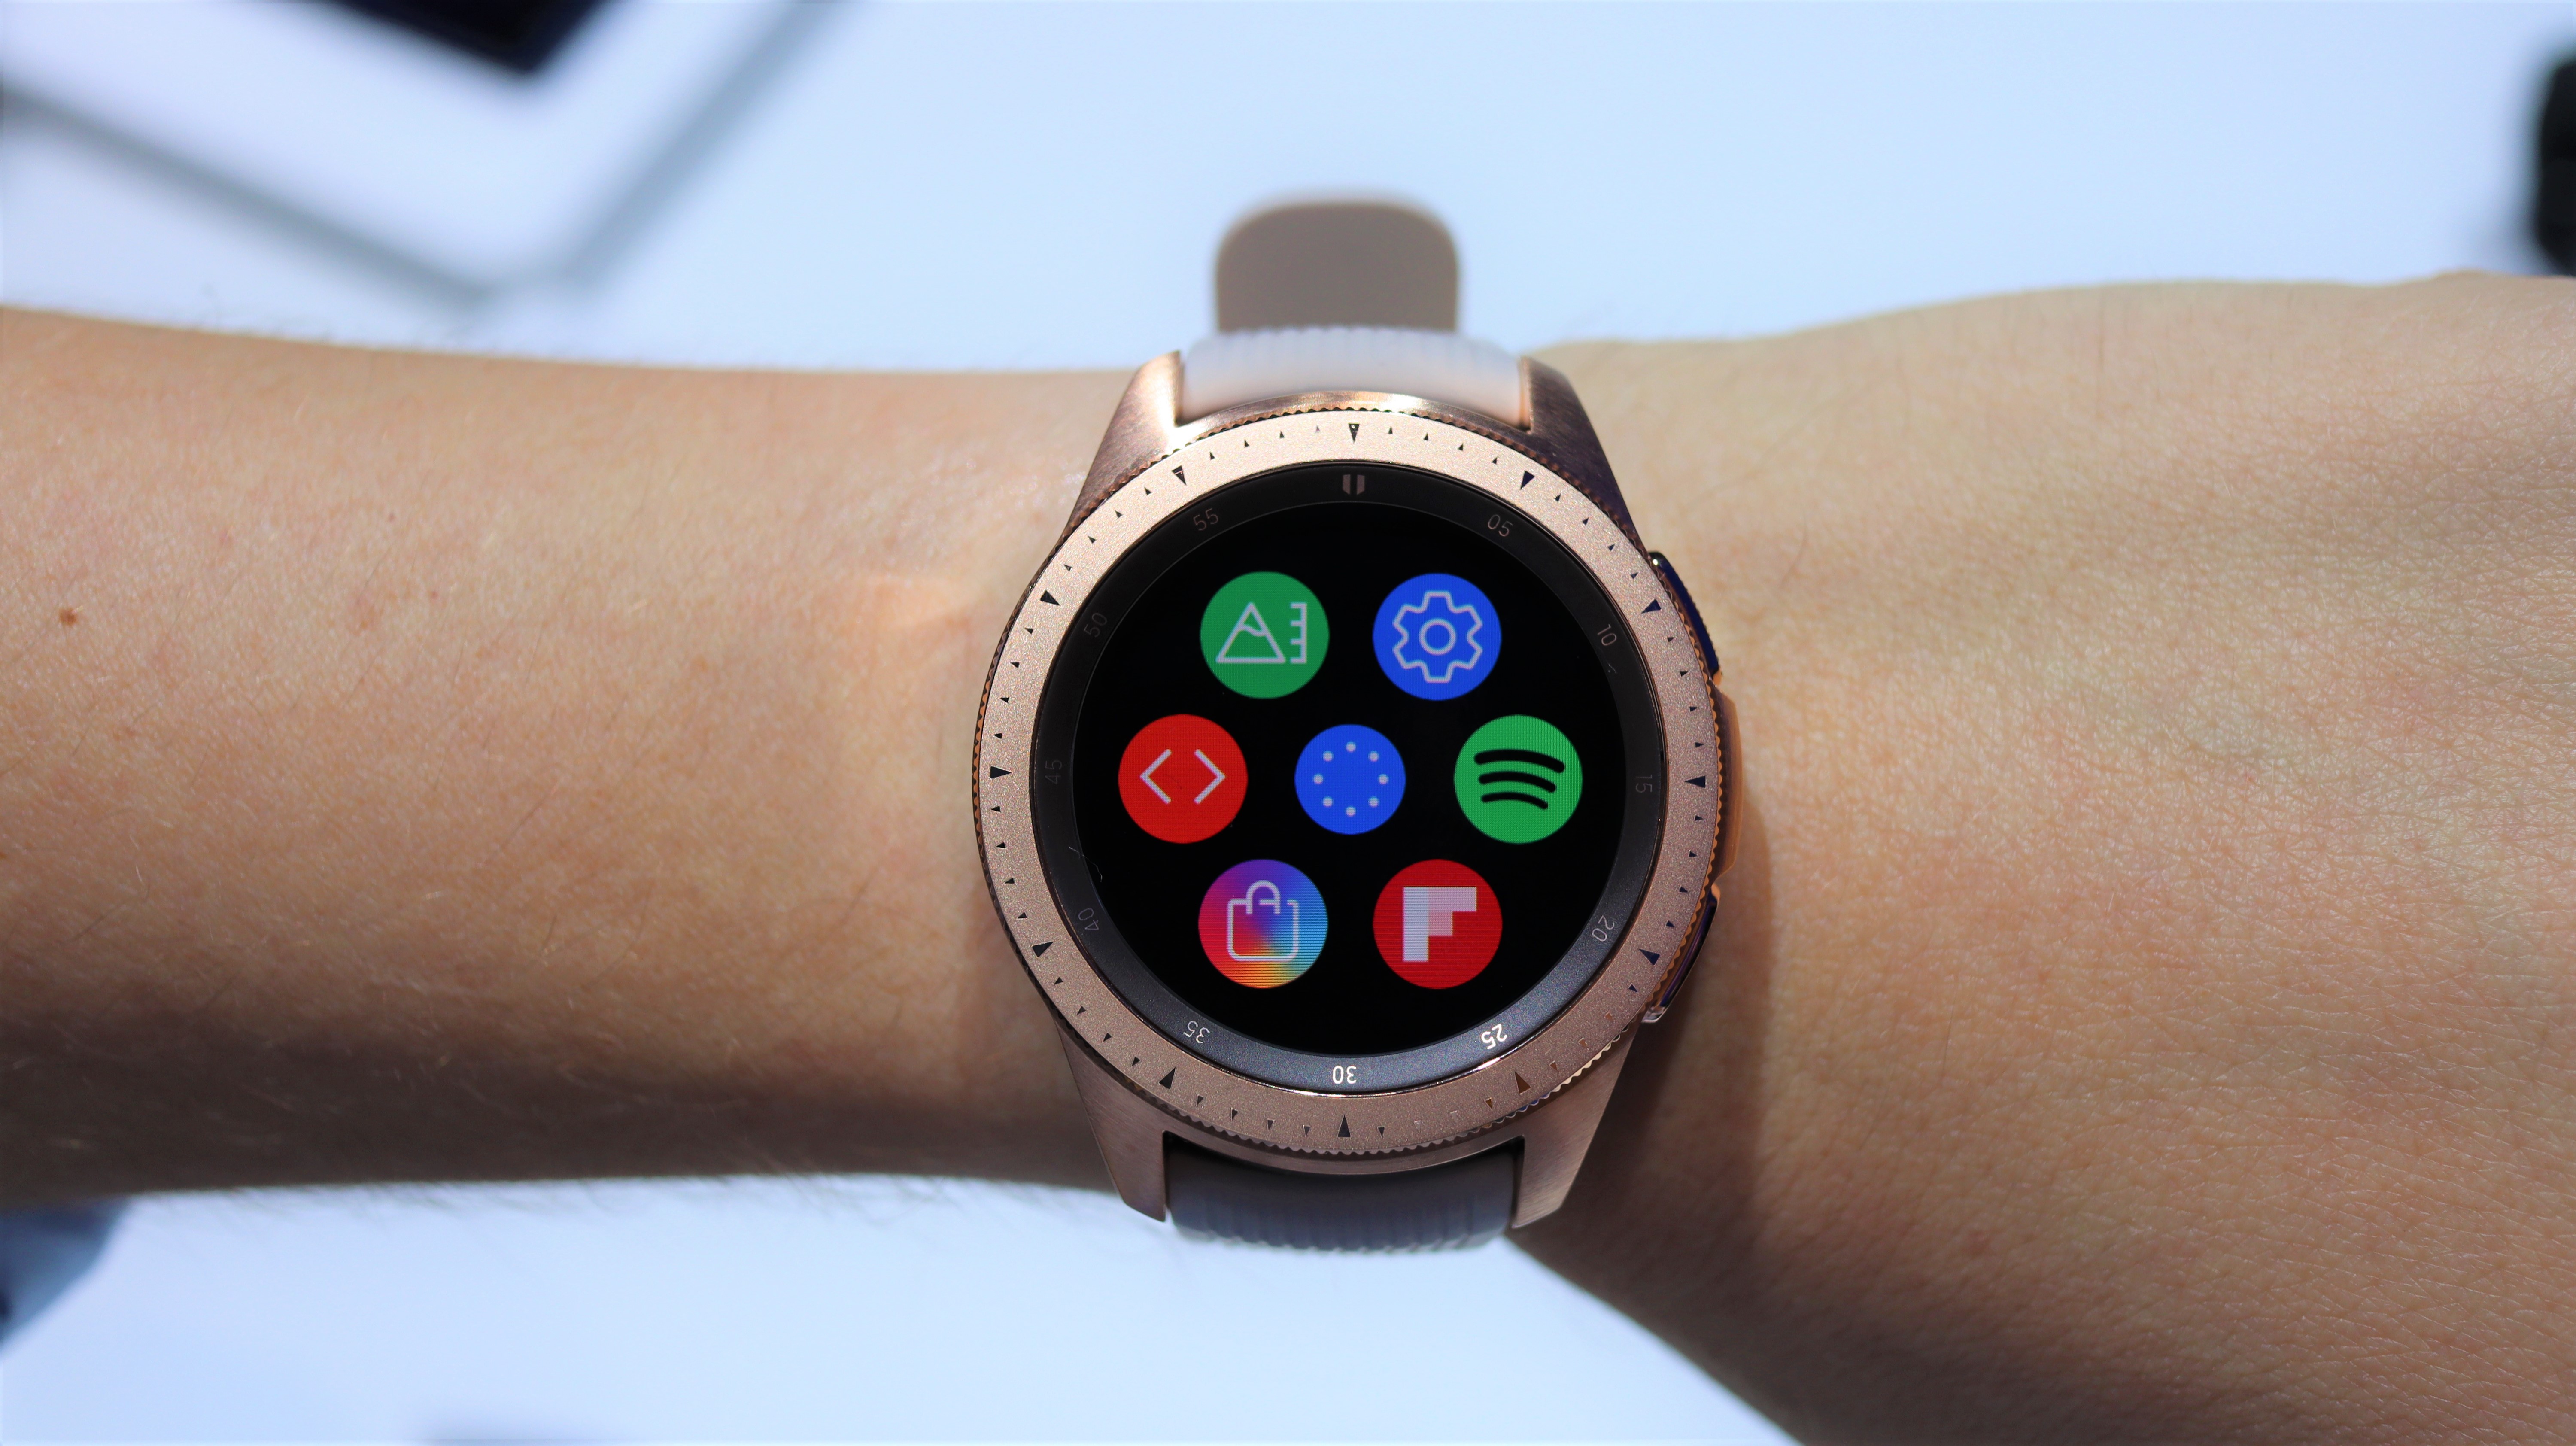 Will the Galaxy Watch 2 sport a new design?